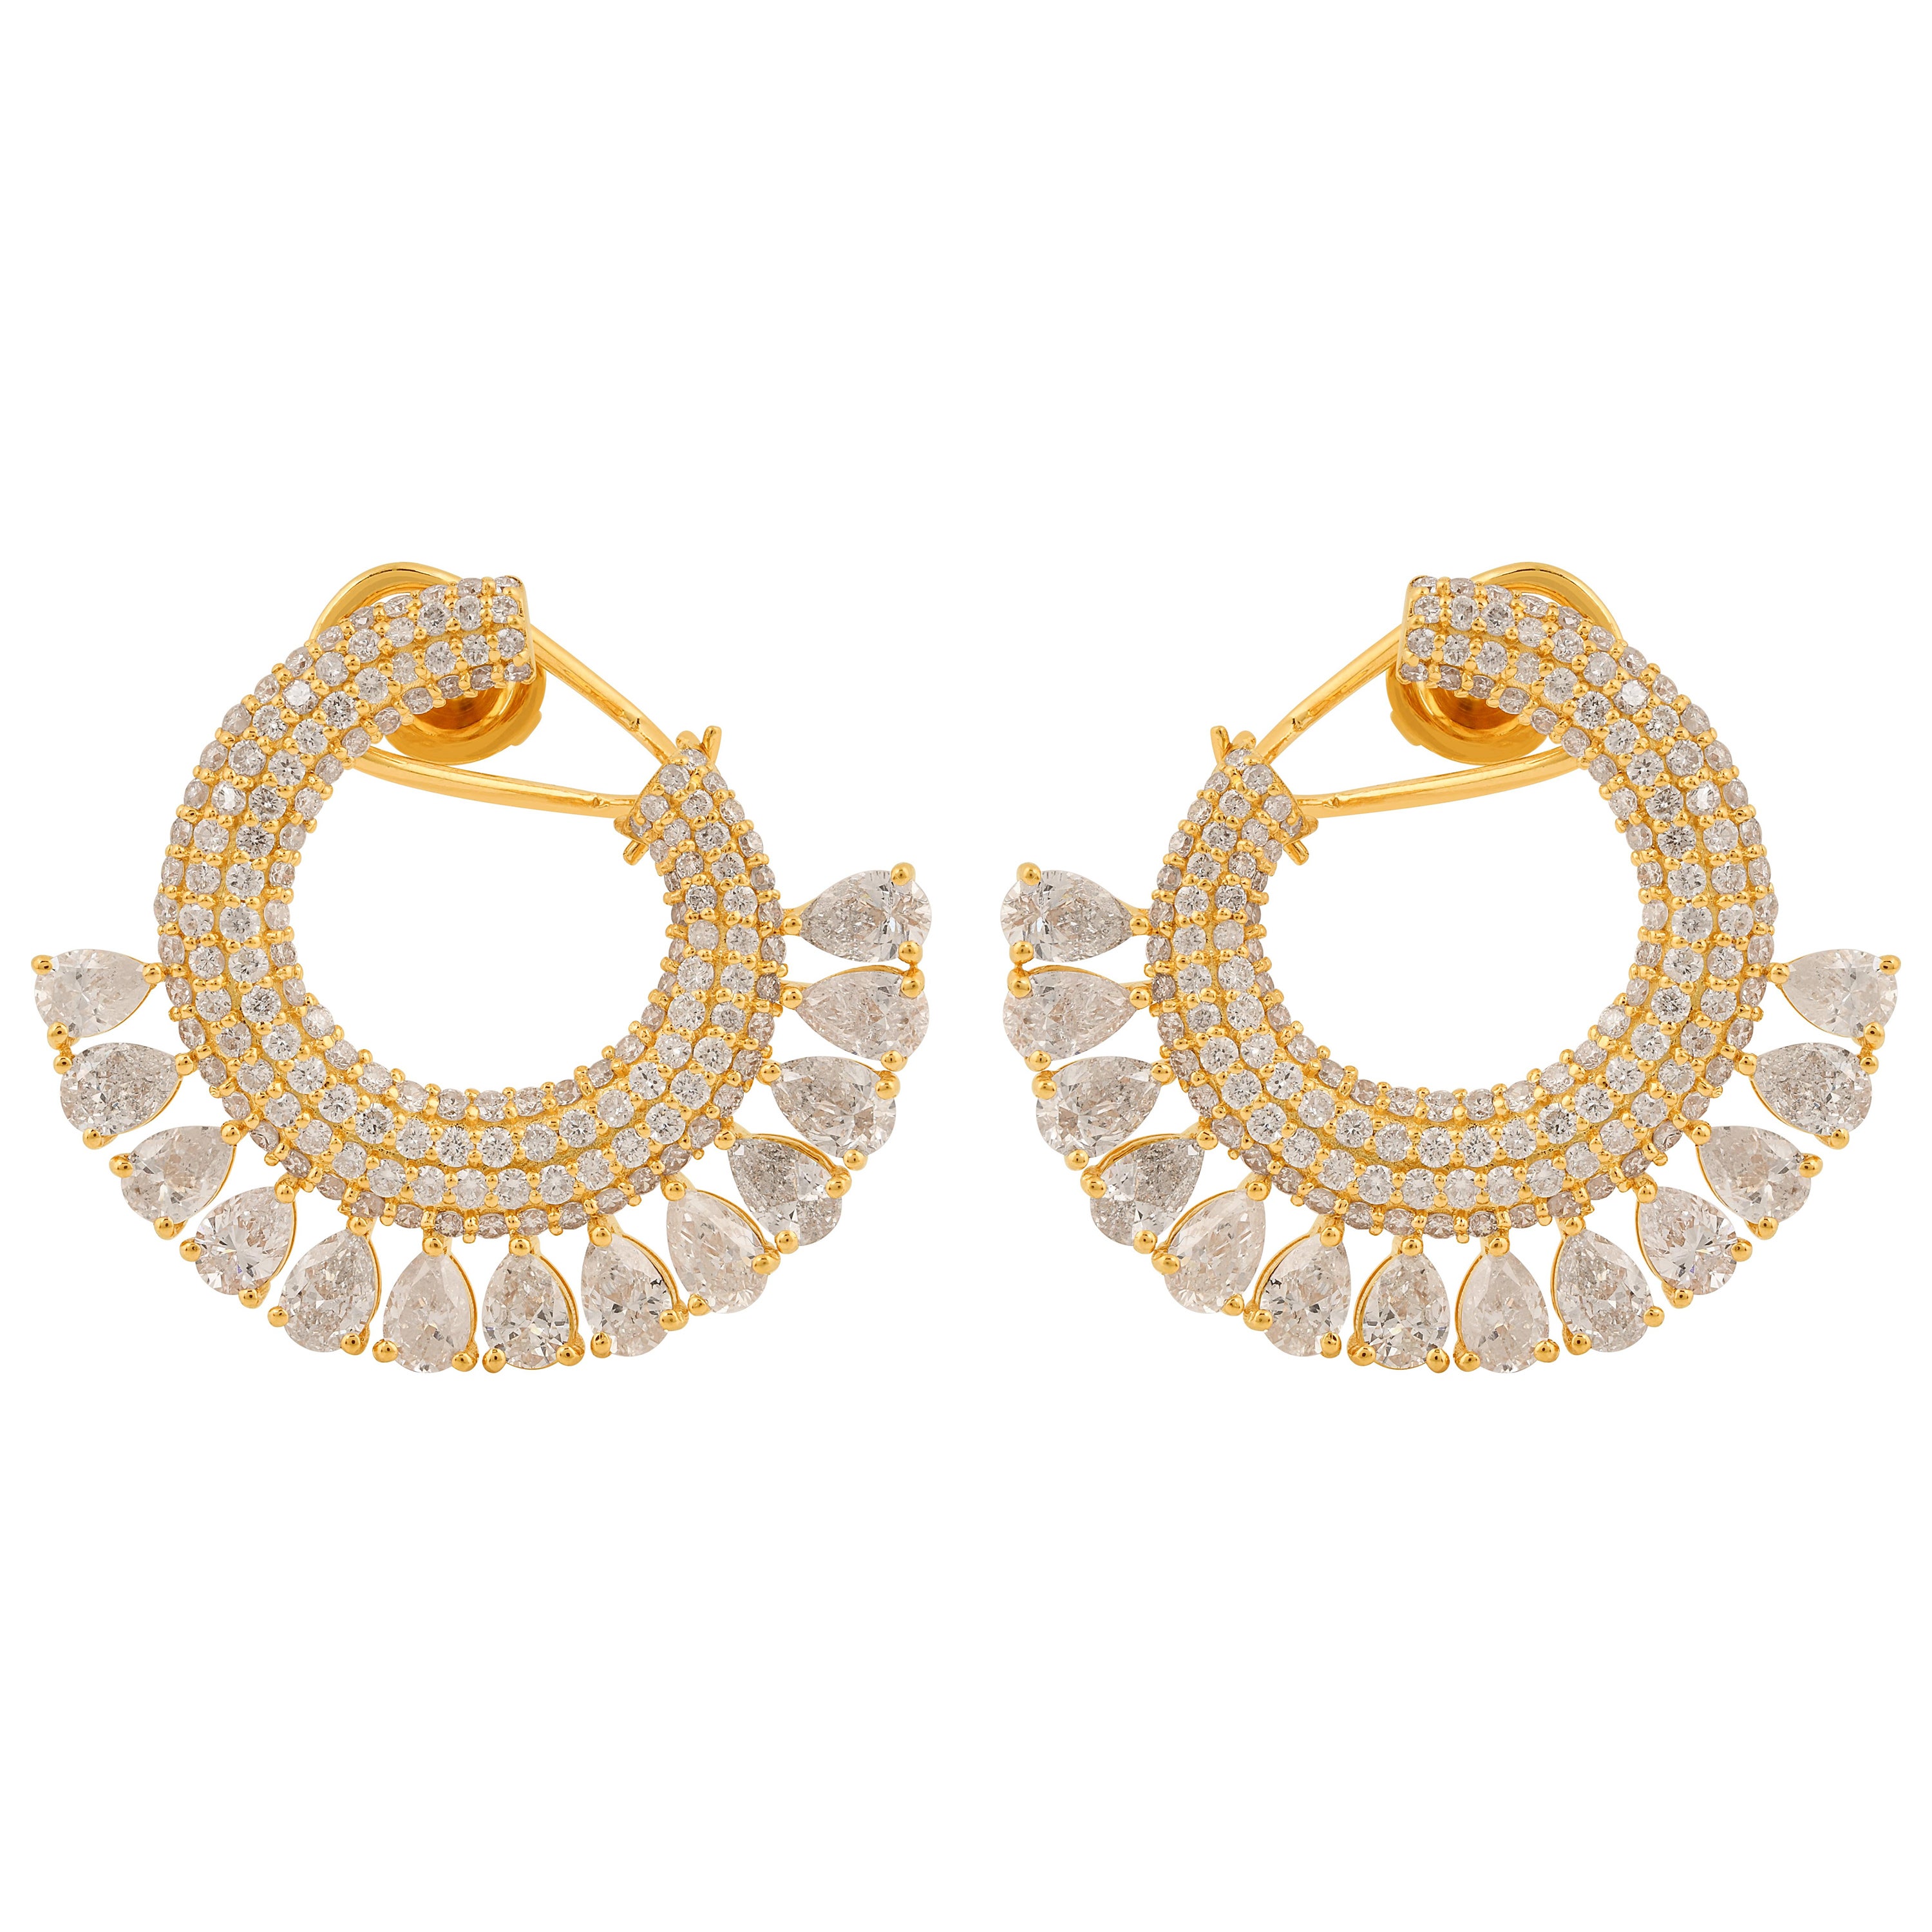 Certified 8 Carat SI Clarity HI Color Pear Diamond Earrings 14 Karat Yellow Gold For Sale